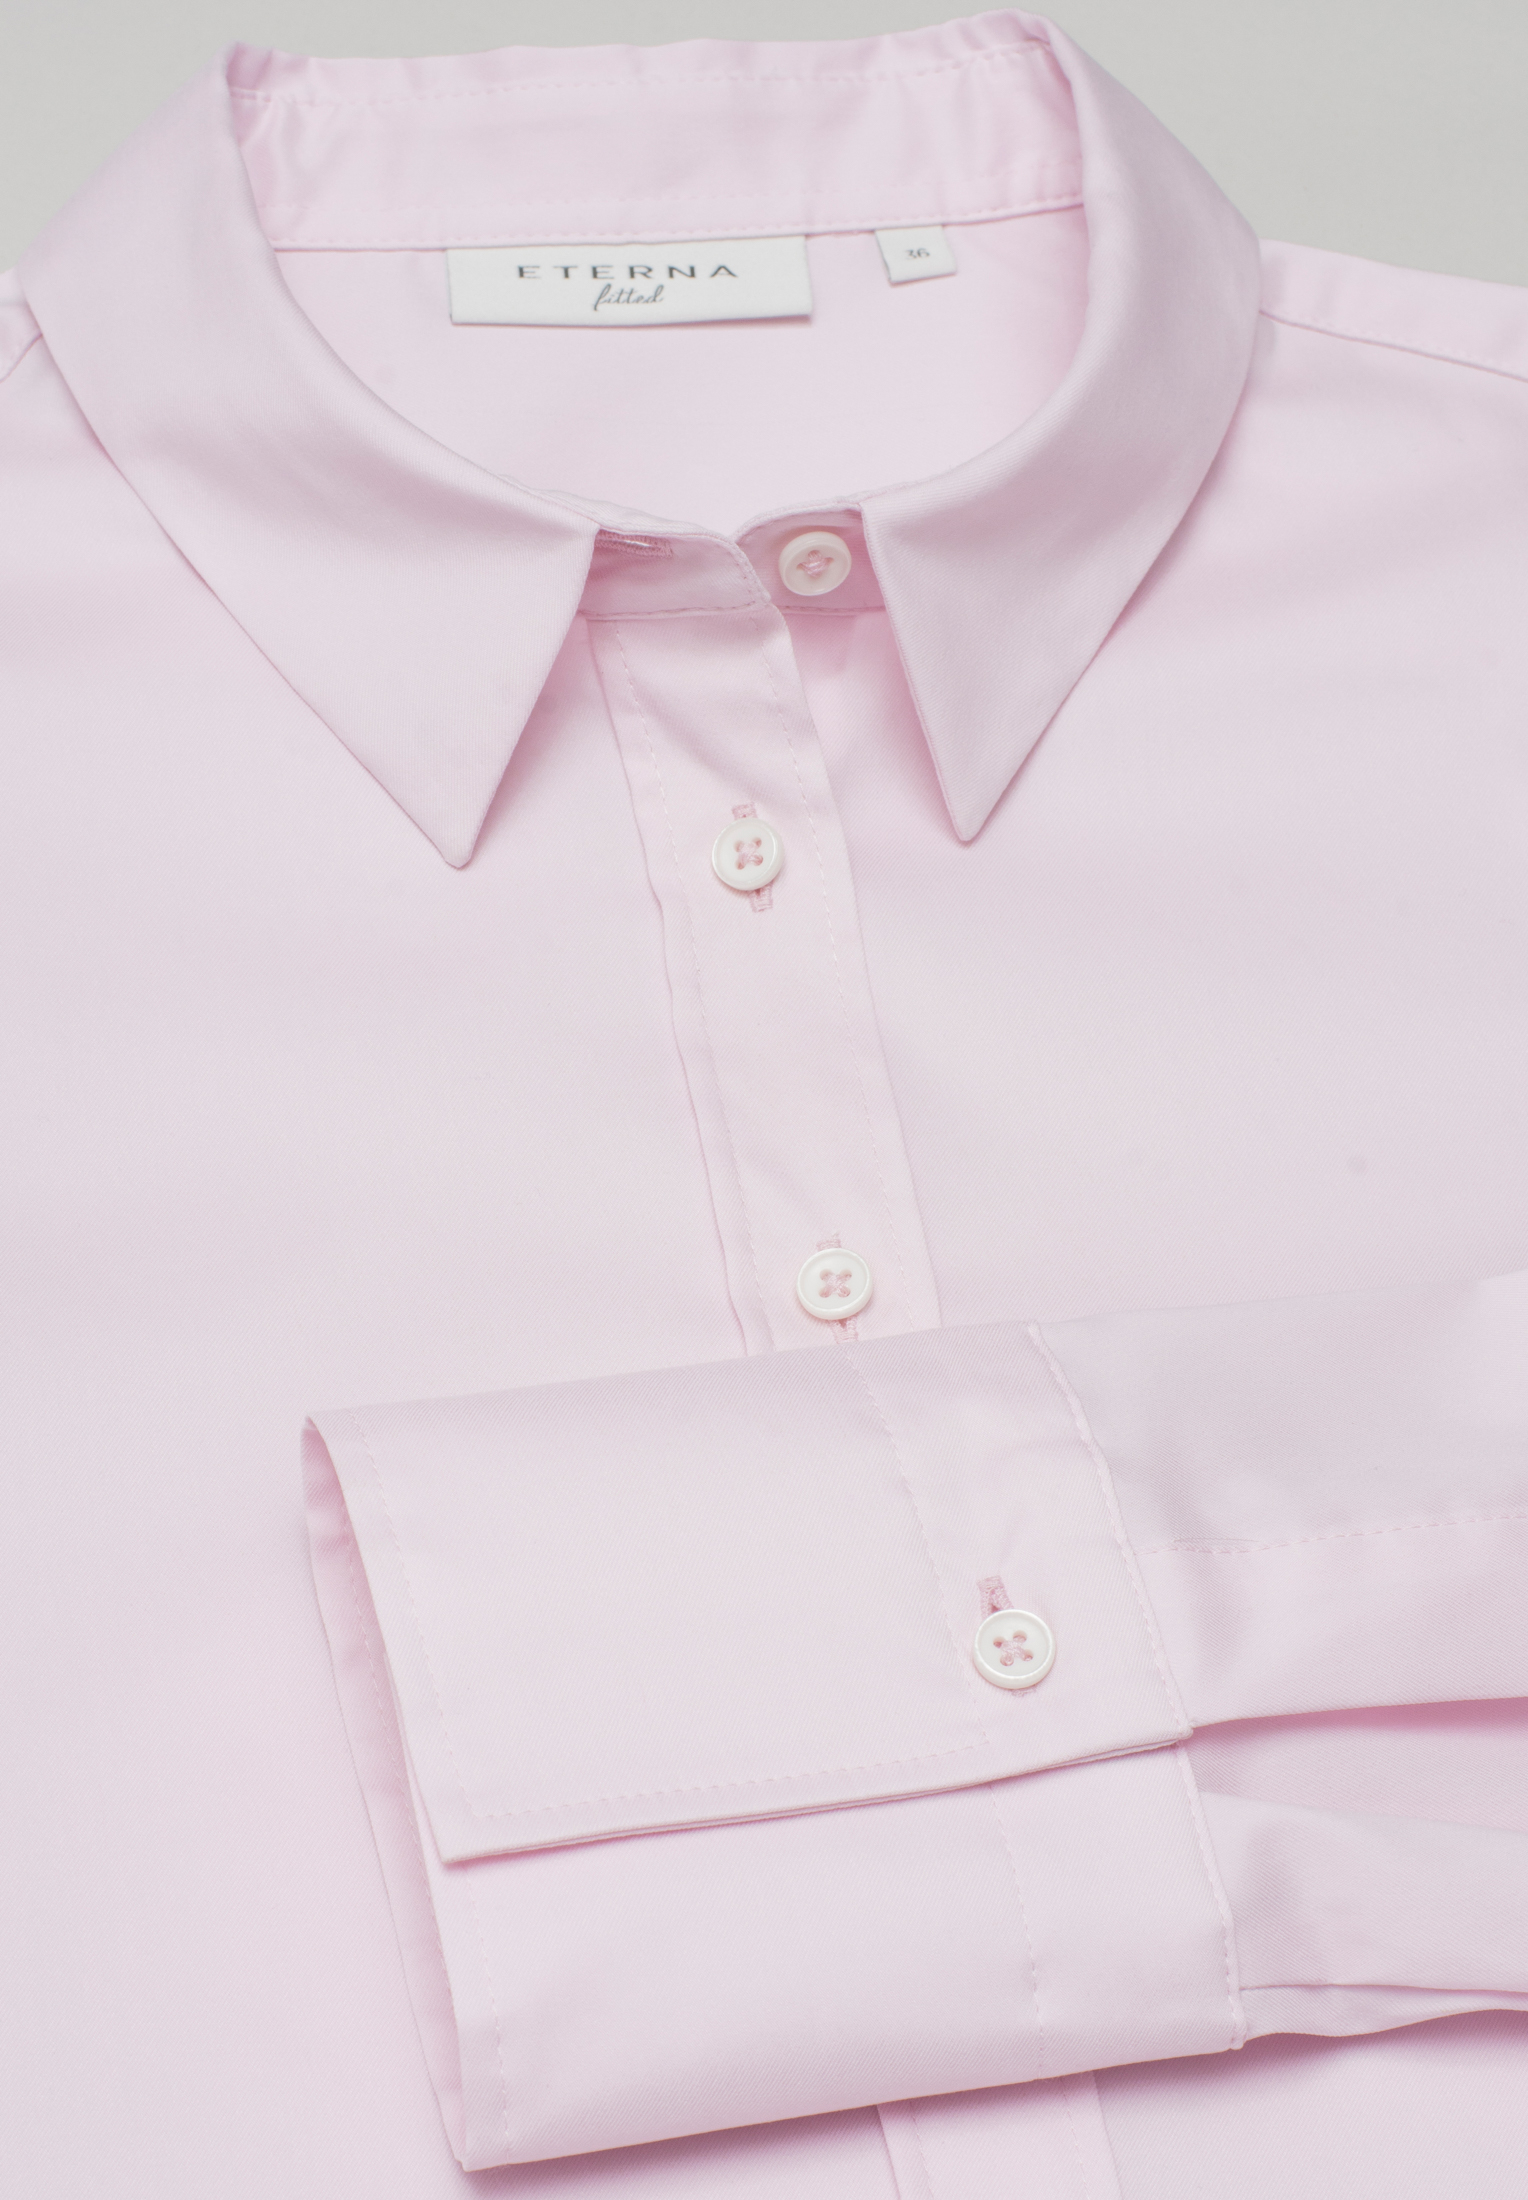 Performance Shirt Blouse in rose plain